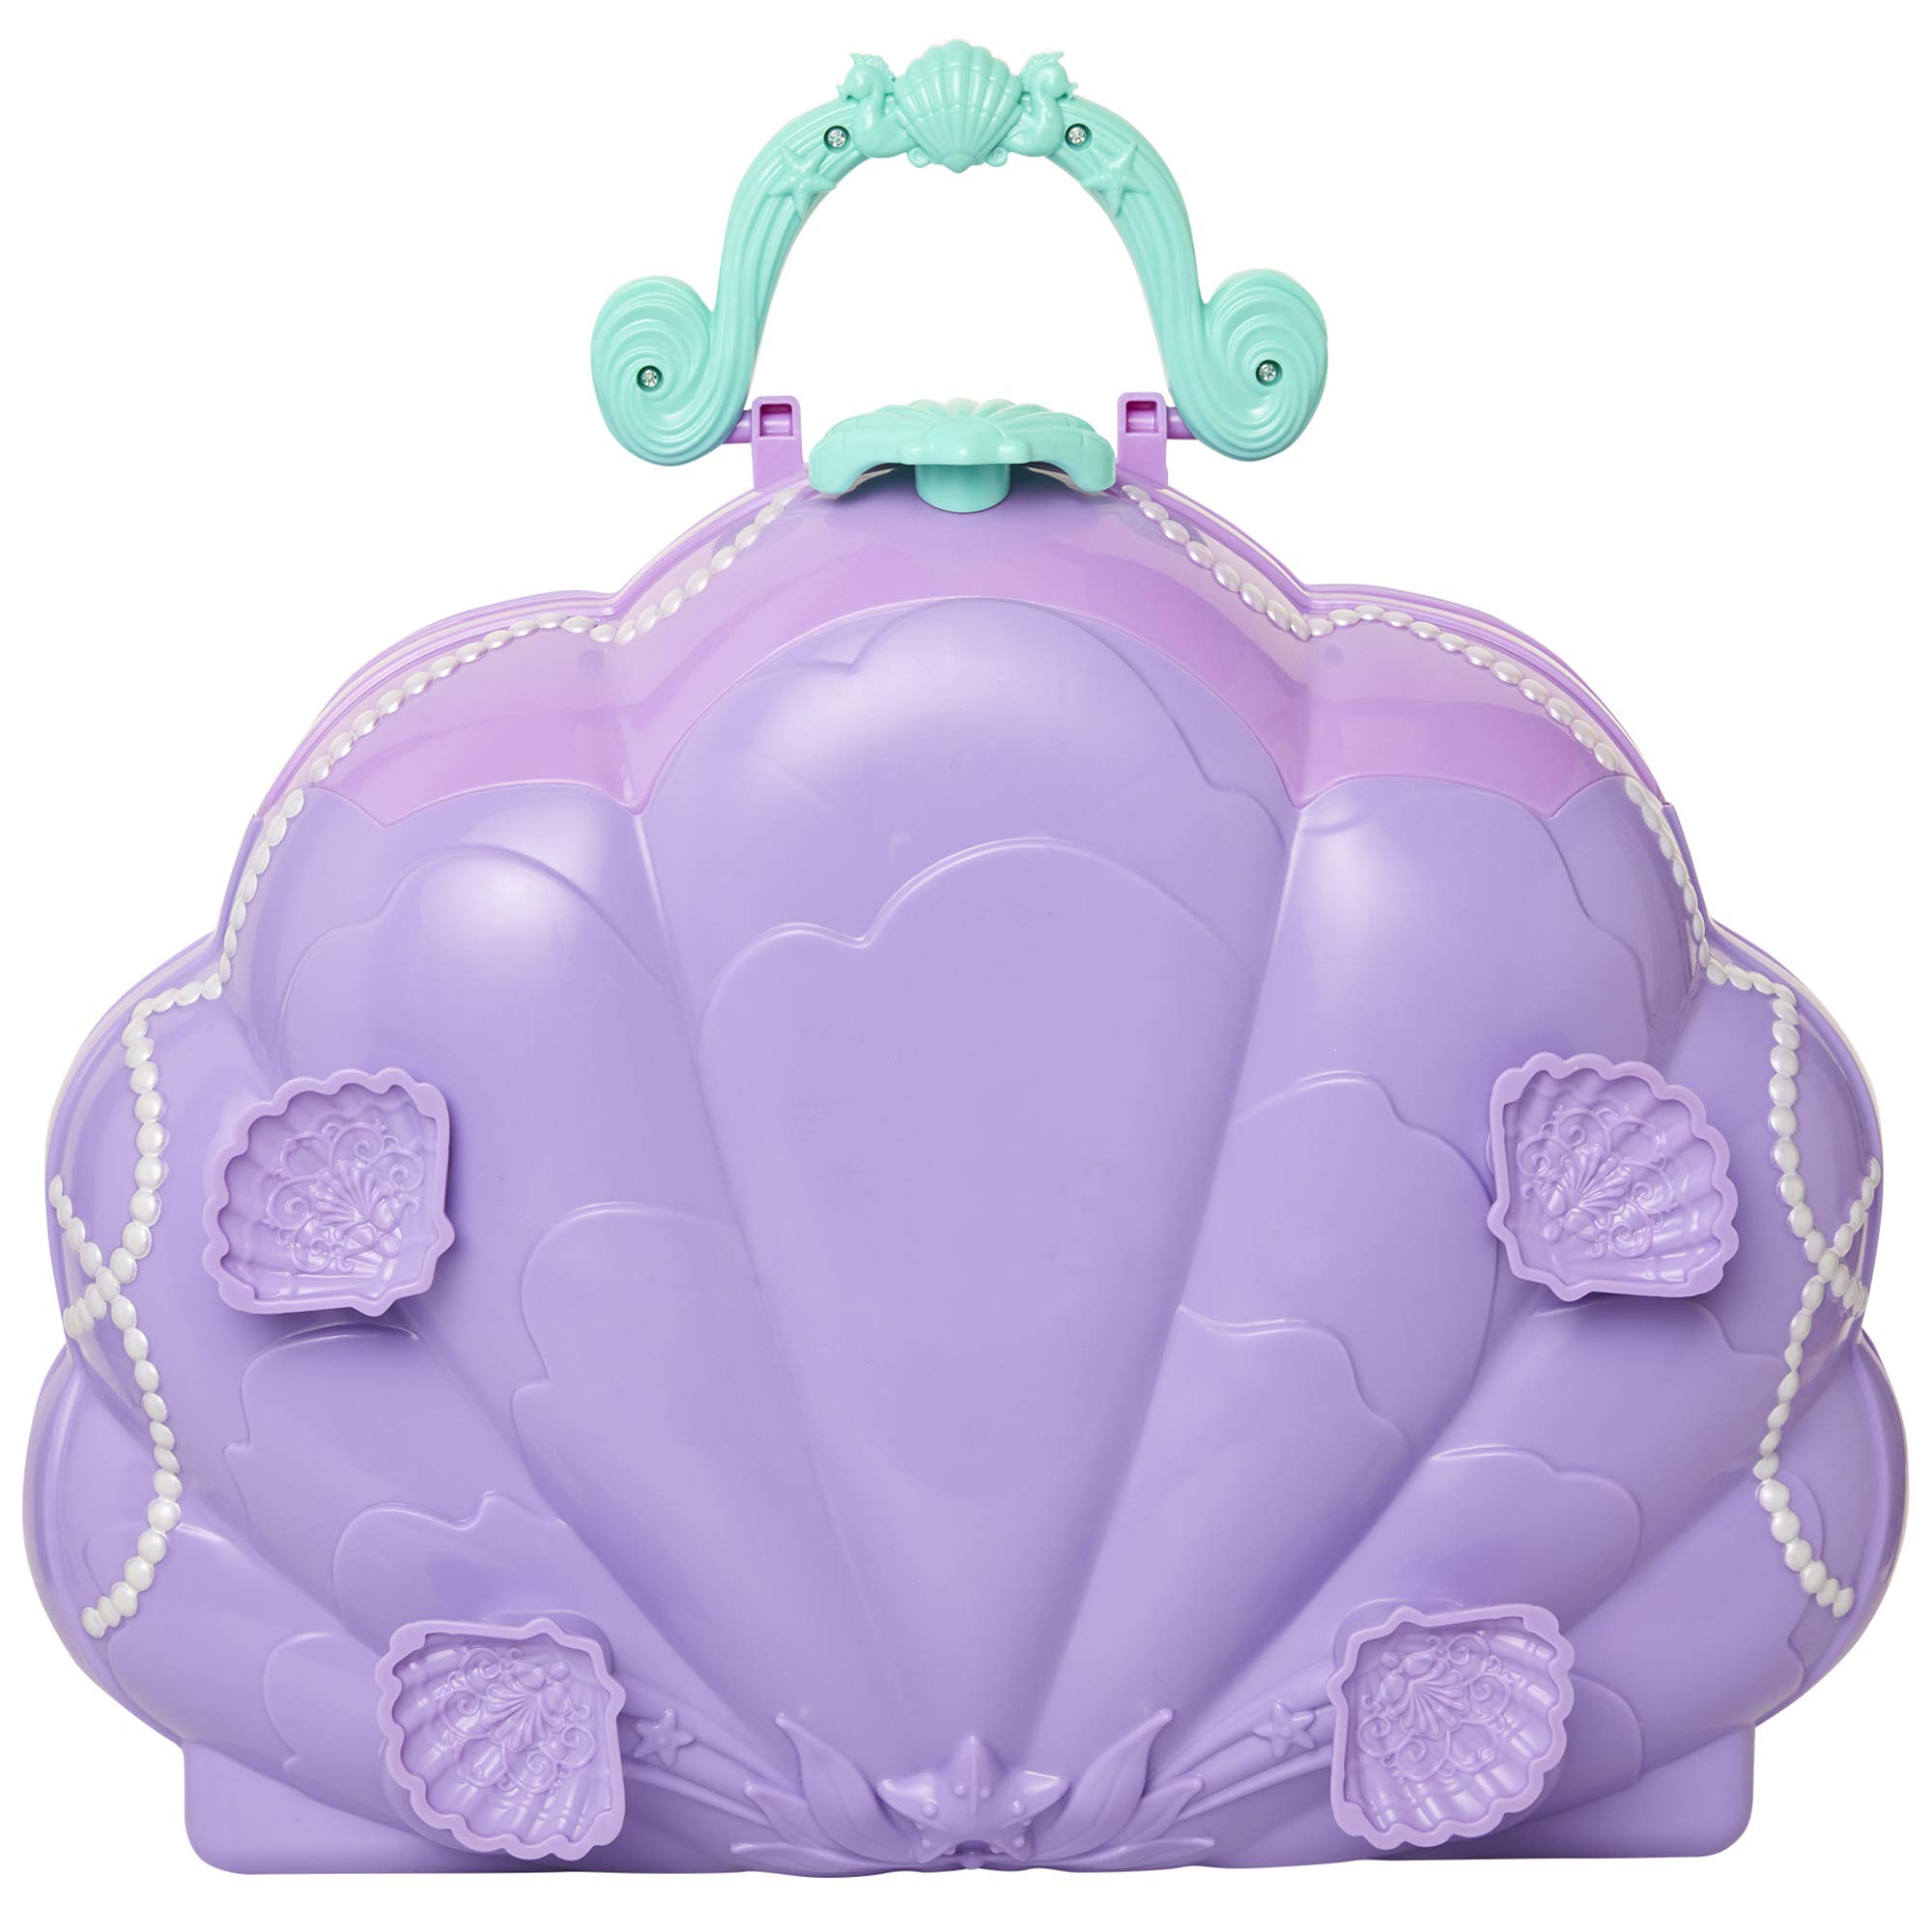 Disney Princess Ariel's Vanity Under The Sea Tabletop Music & Light's Vanity for Girls Ages 3+